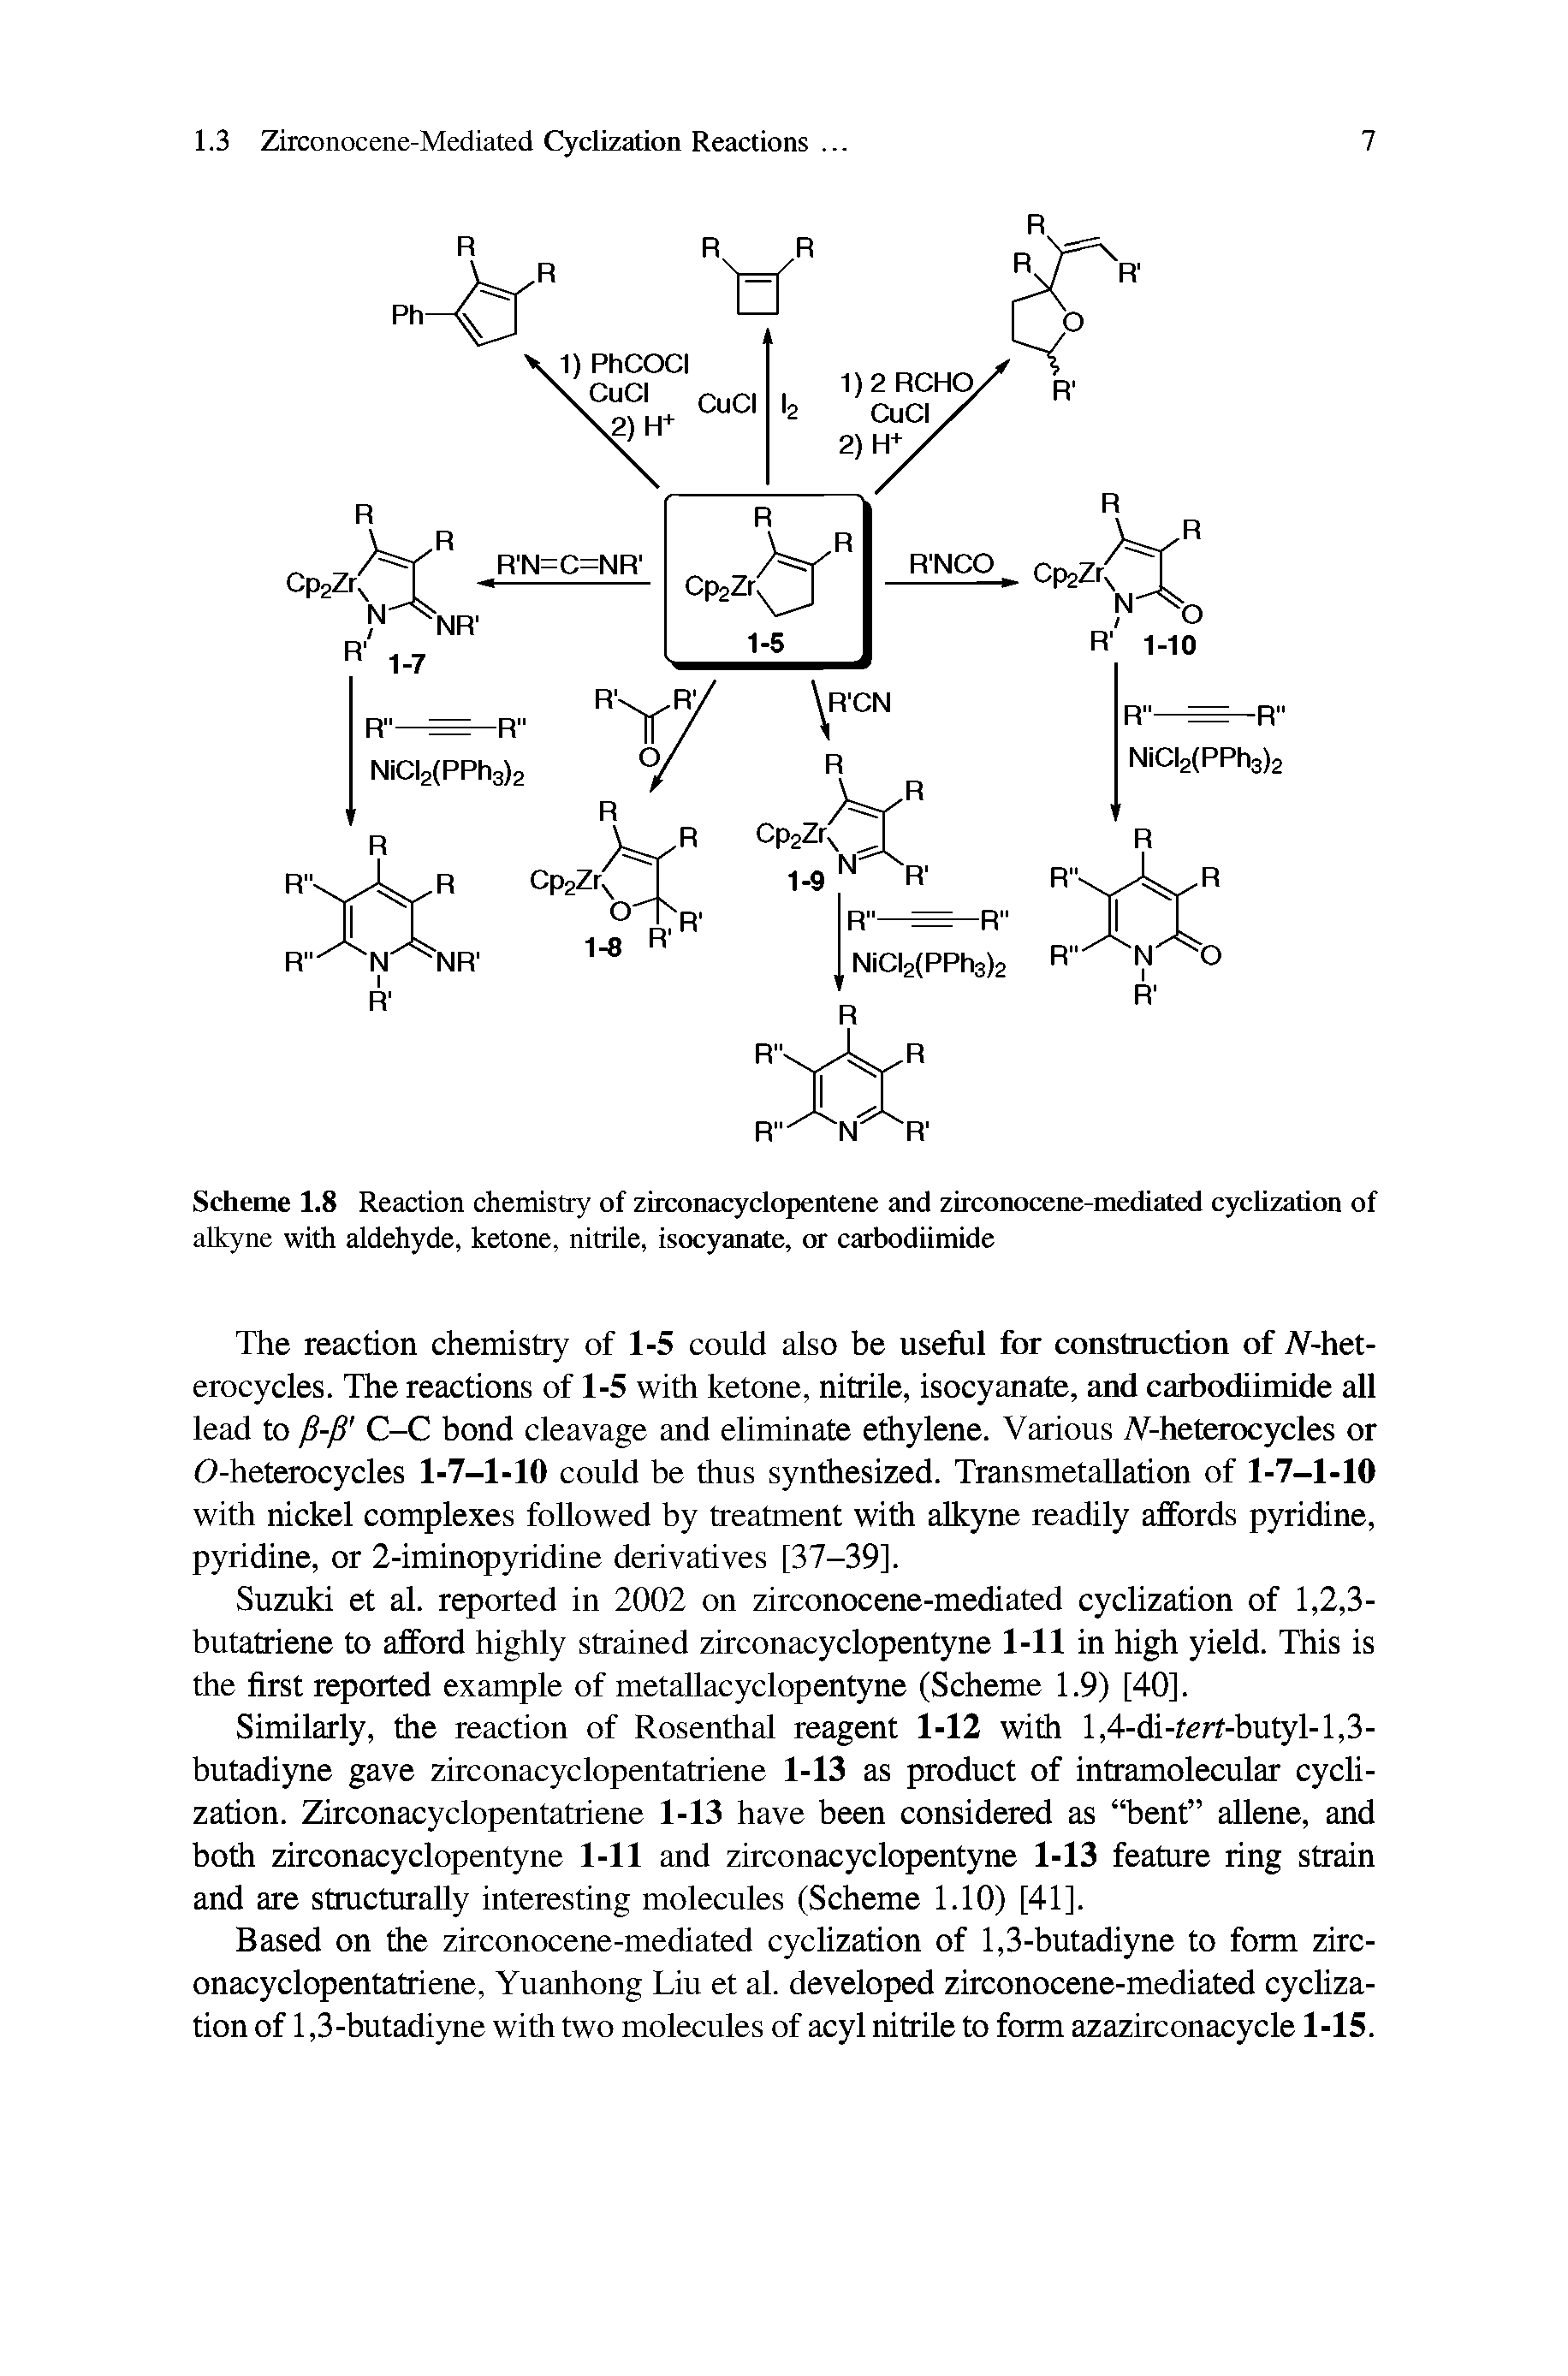 Scheme 1.8 Reaction chemistry of zirconacyclopentene and zirconocene-mediated cyclization of alkyne with aldehyde, ketone, nitrile, isocyanate, <ar carbodiimide...